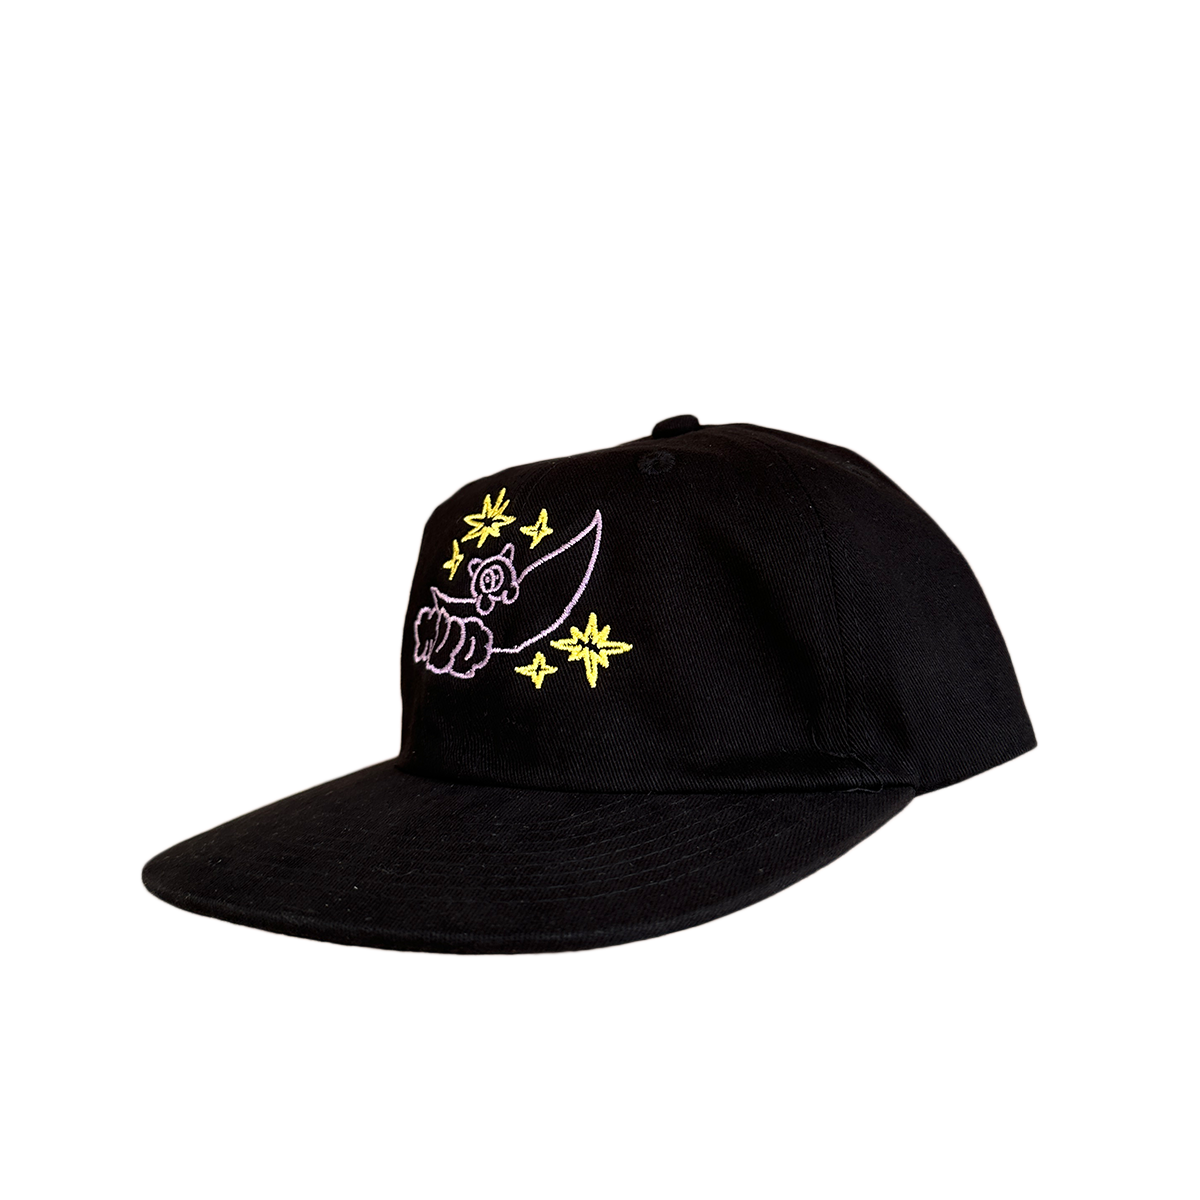 Mud Nightfall Hat - Black